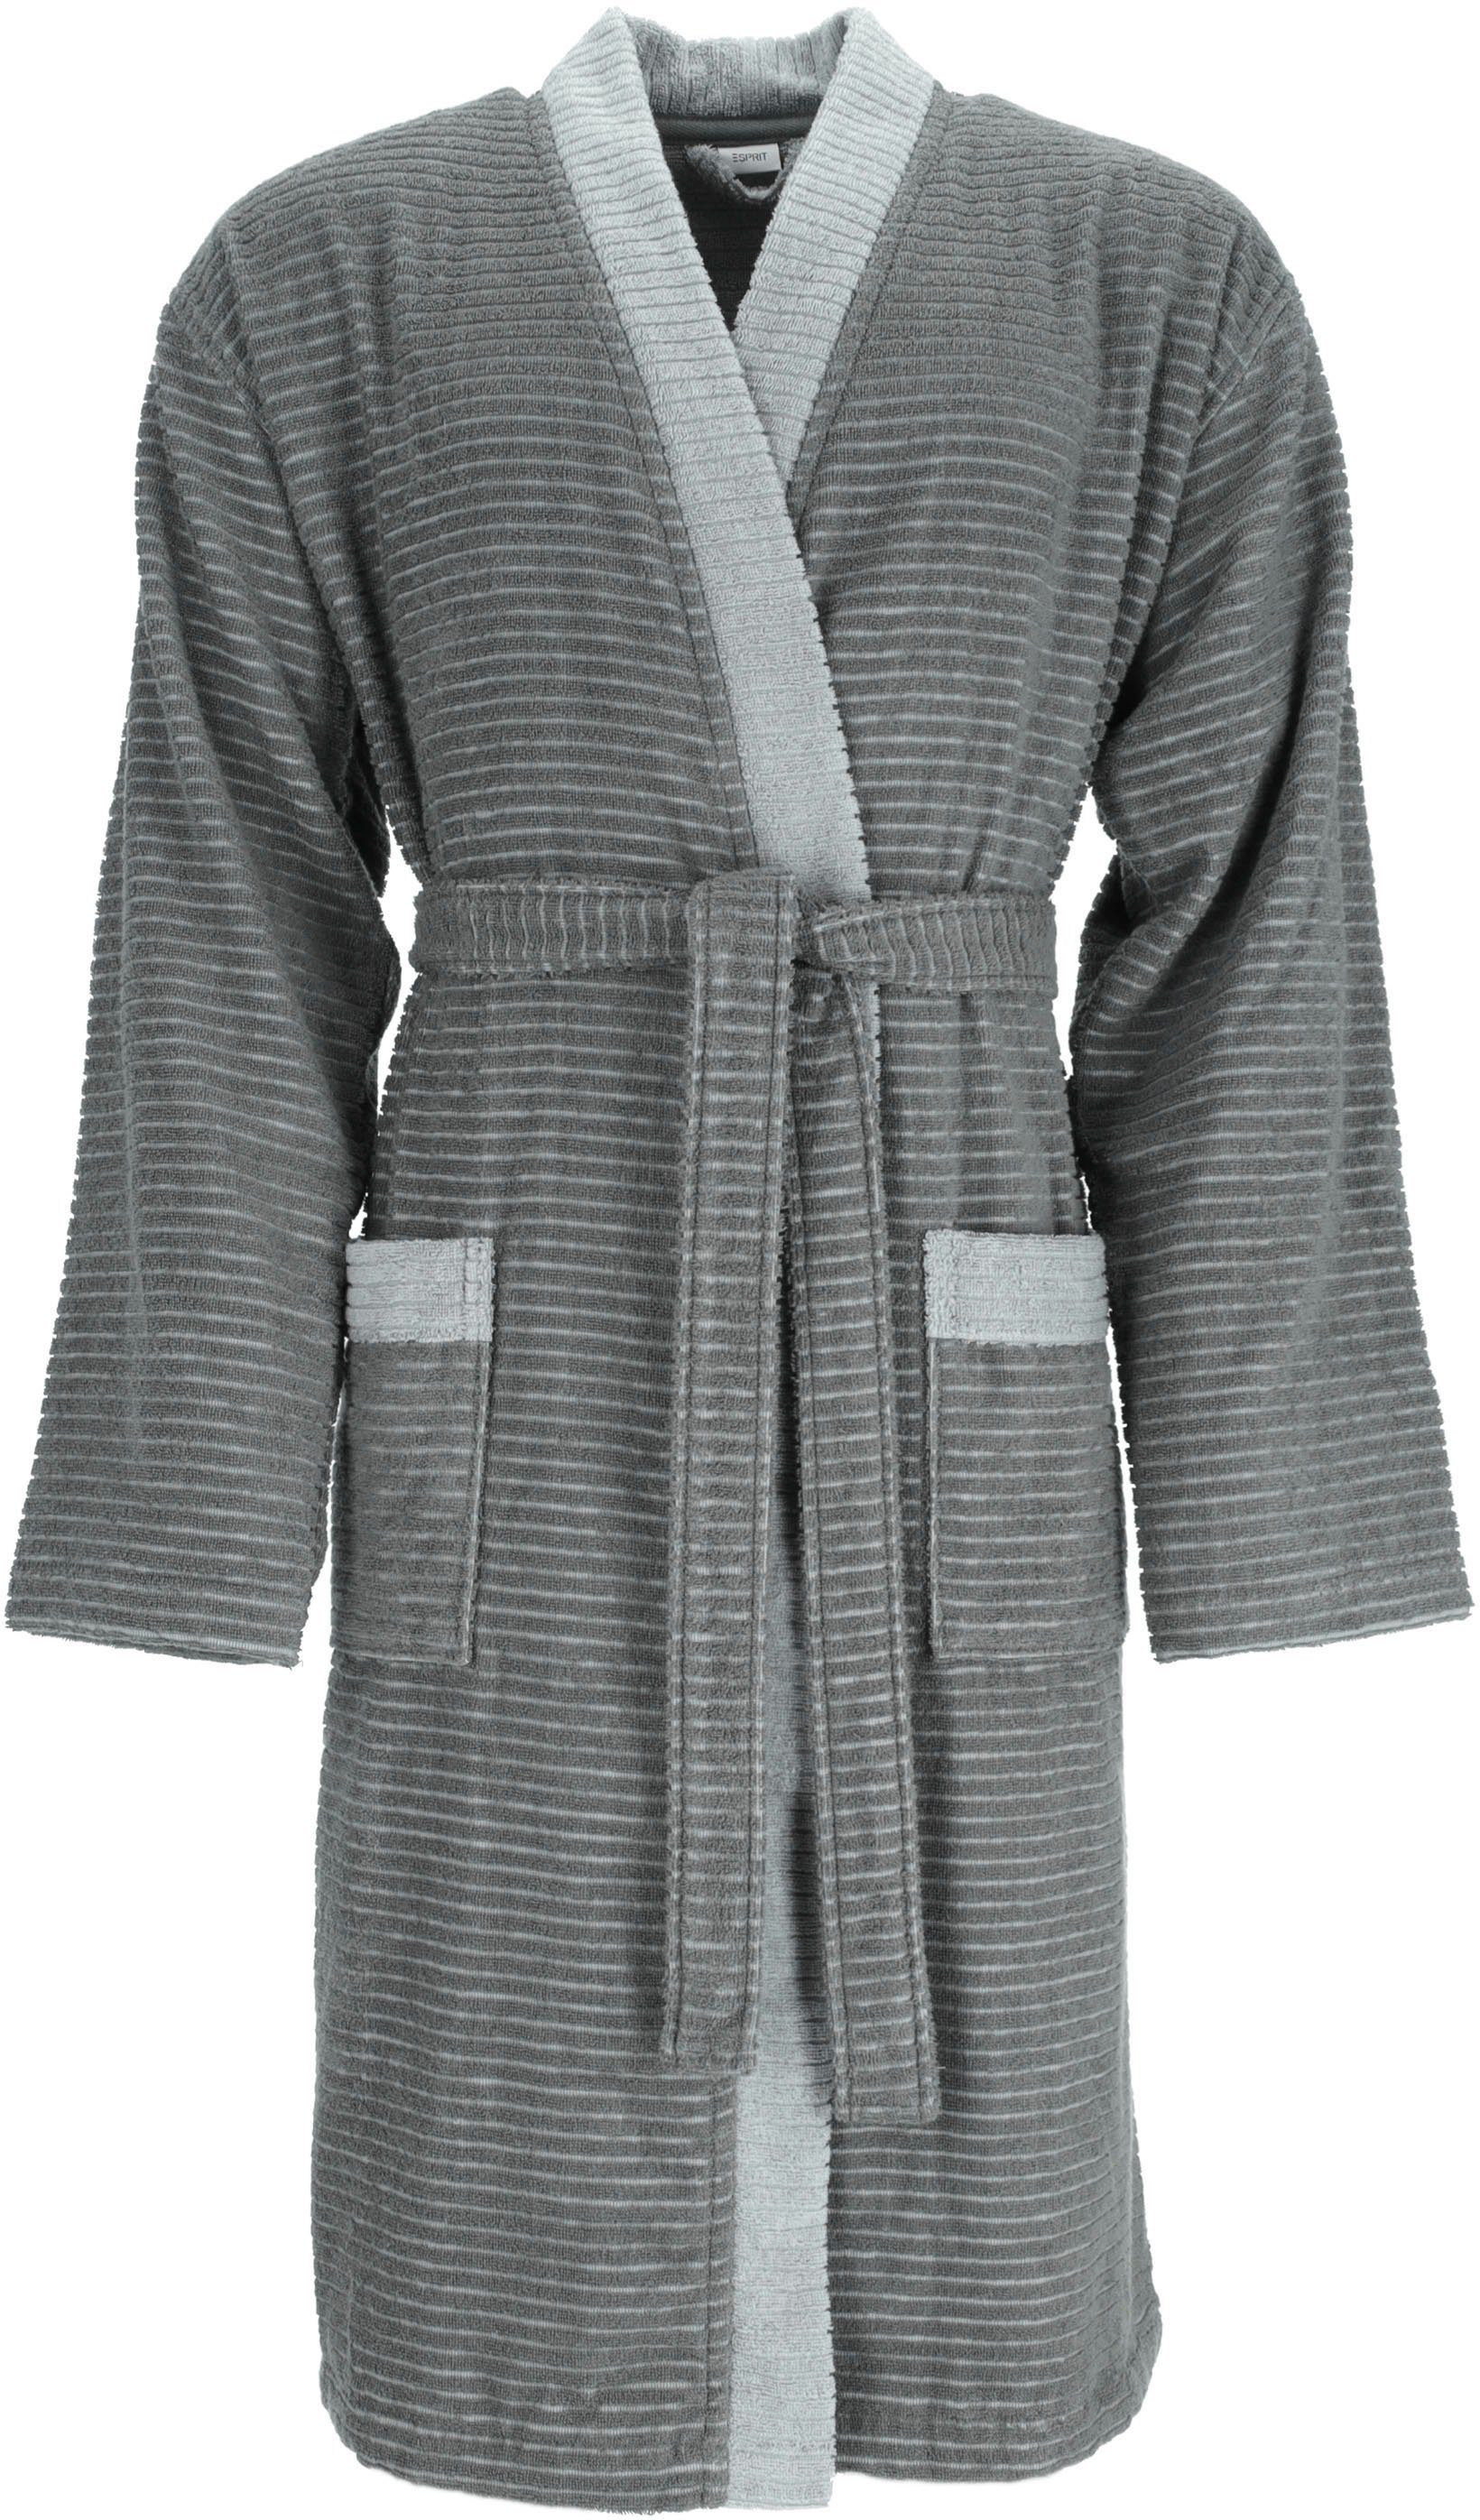 Esprit Herrenbademantel Double Stripe, Langform, Webfrottier, Kimono-Kragen, Gürtel, Doubleface Kimonomantel anthracite